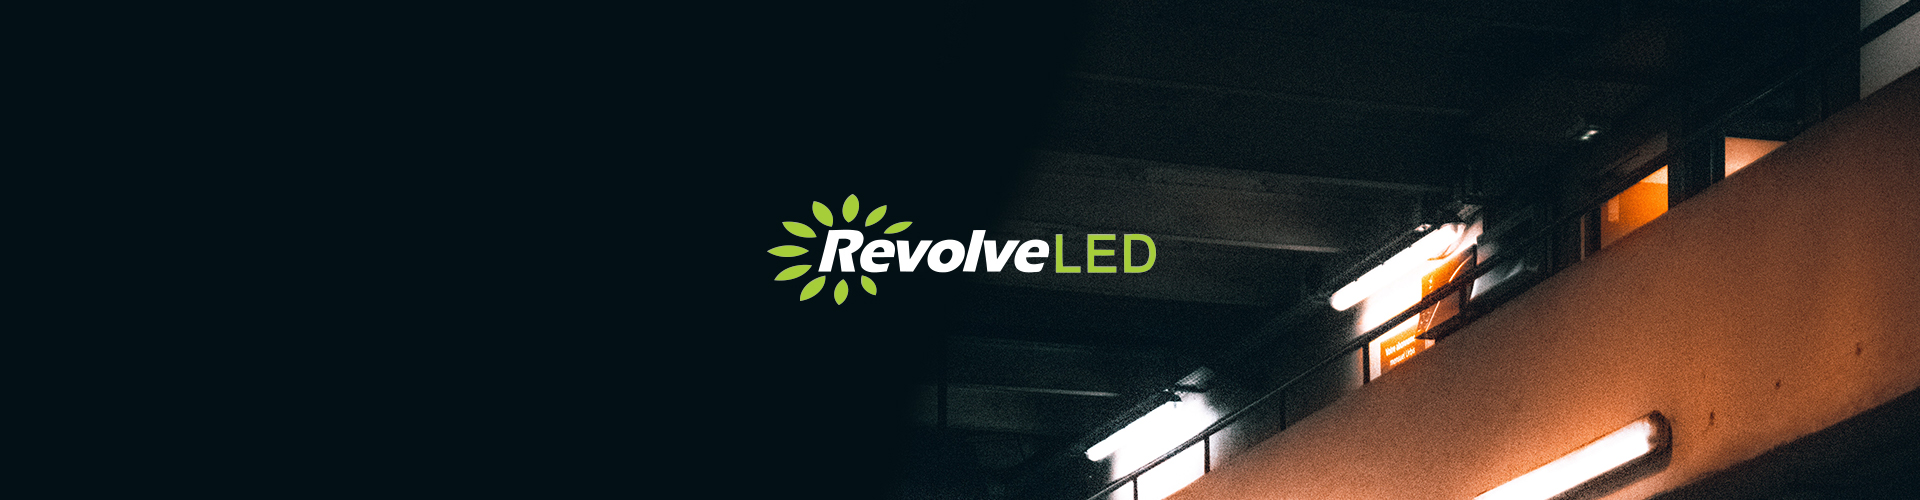 Case Study - Revolve LED